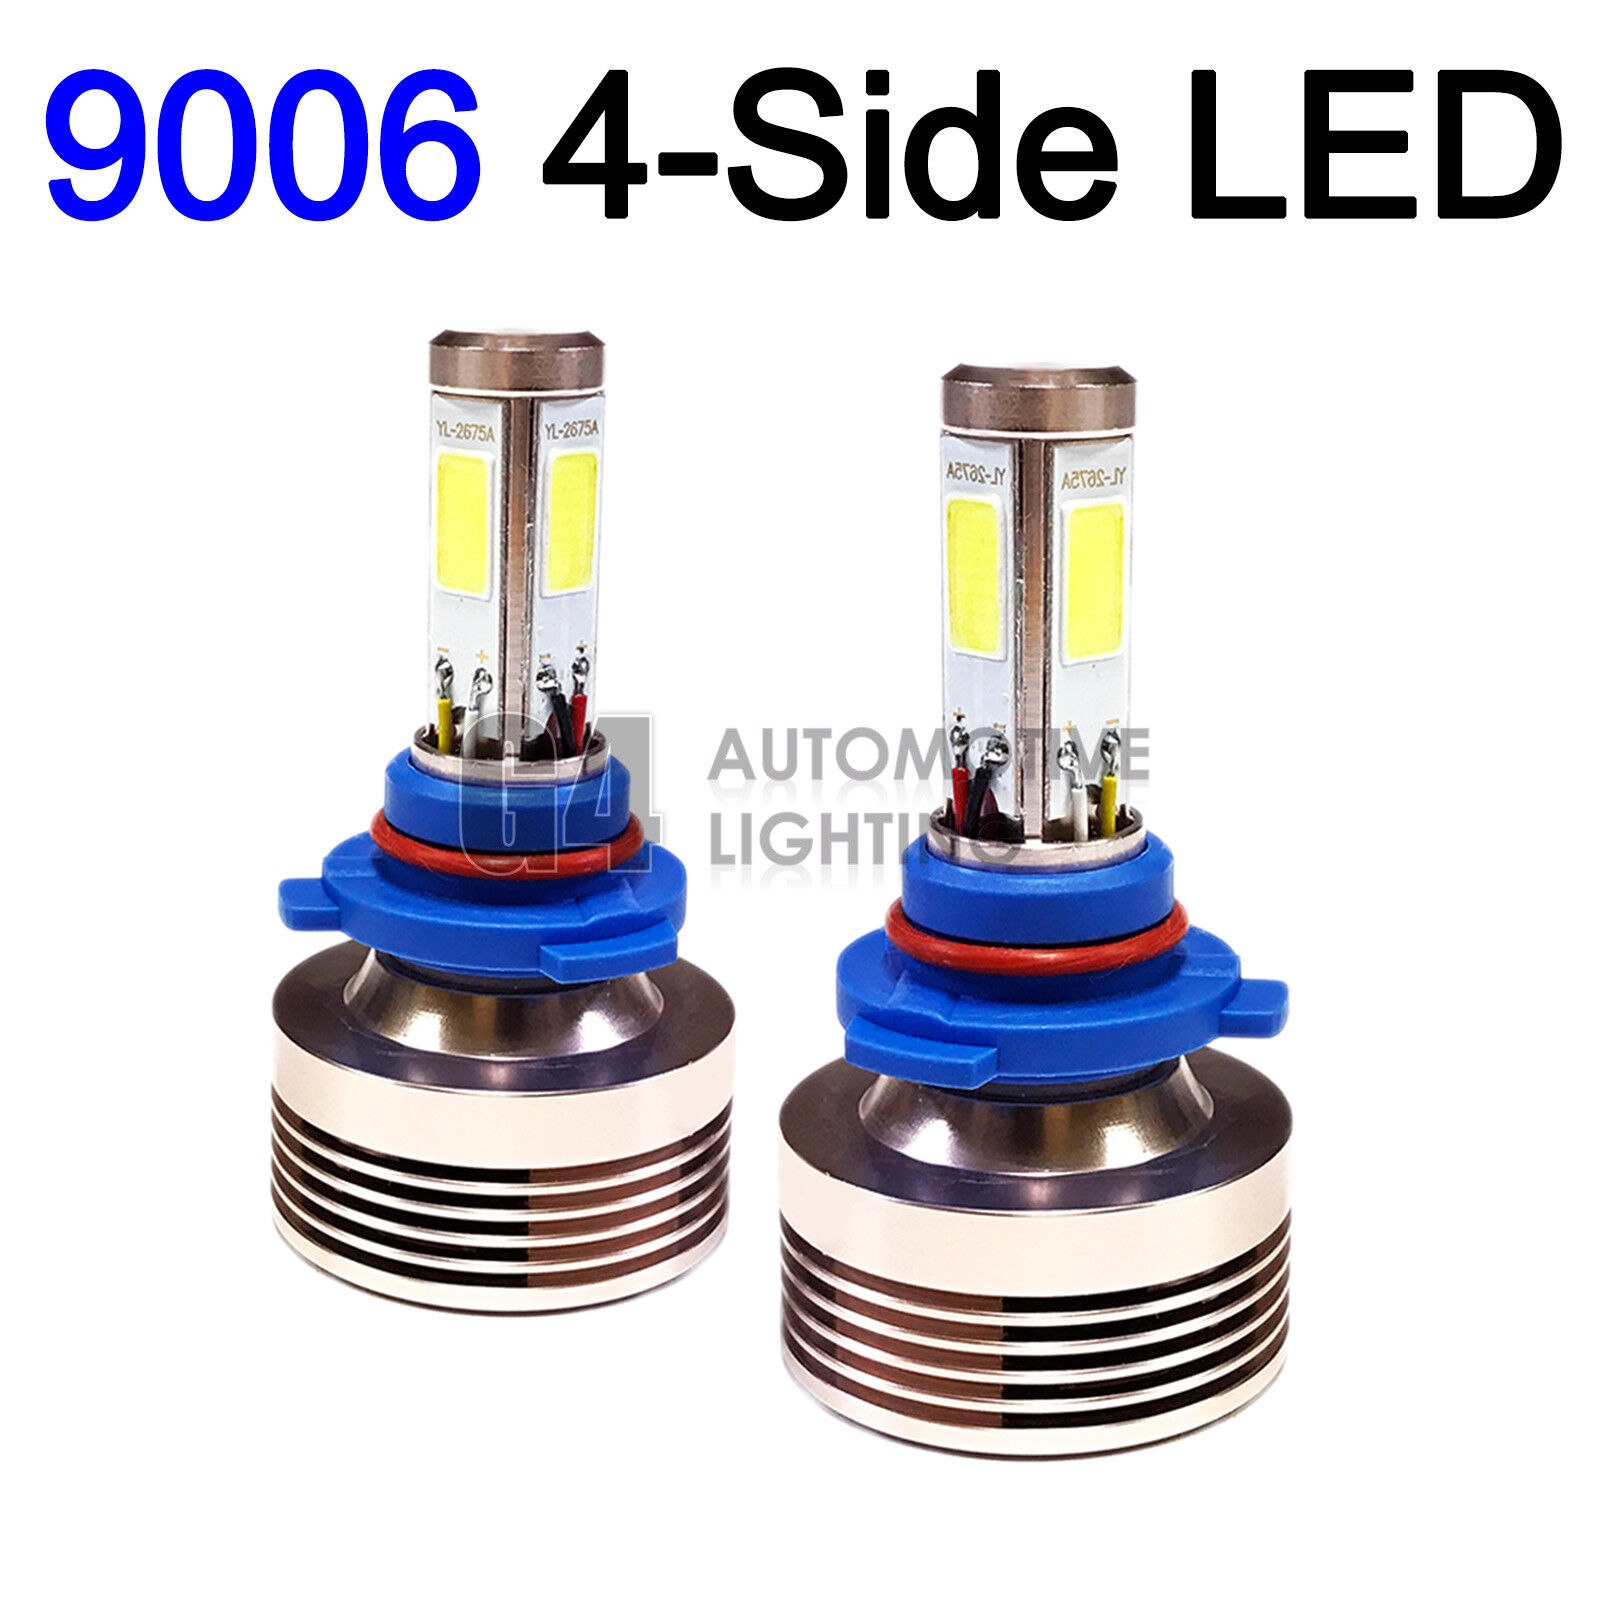 2x 4-Side HB4 9006 LED Headlight Kit Bulbs 80W Super Bright 6000K Crystal White